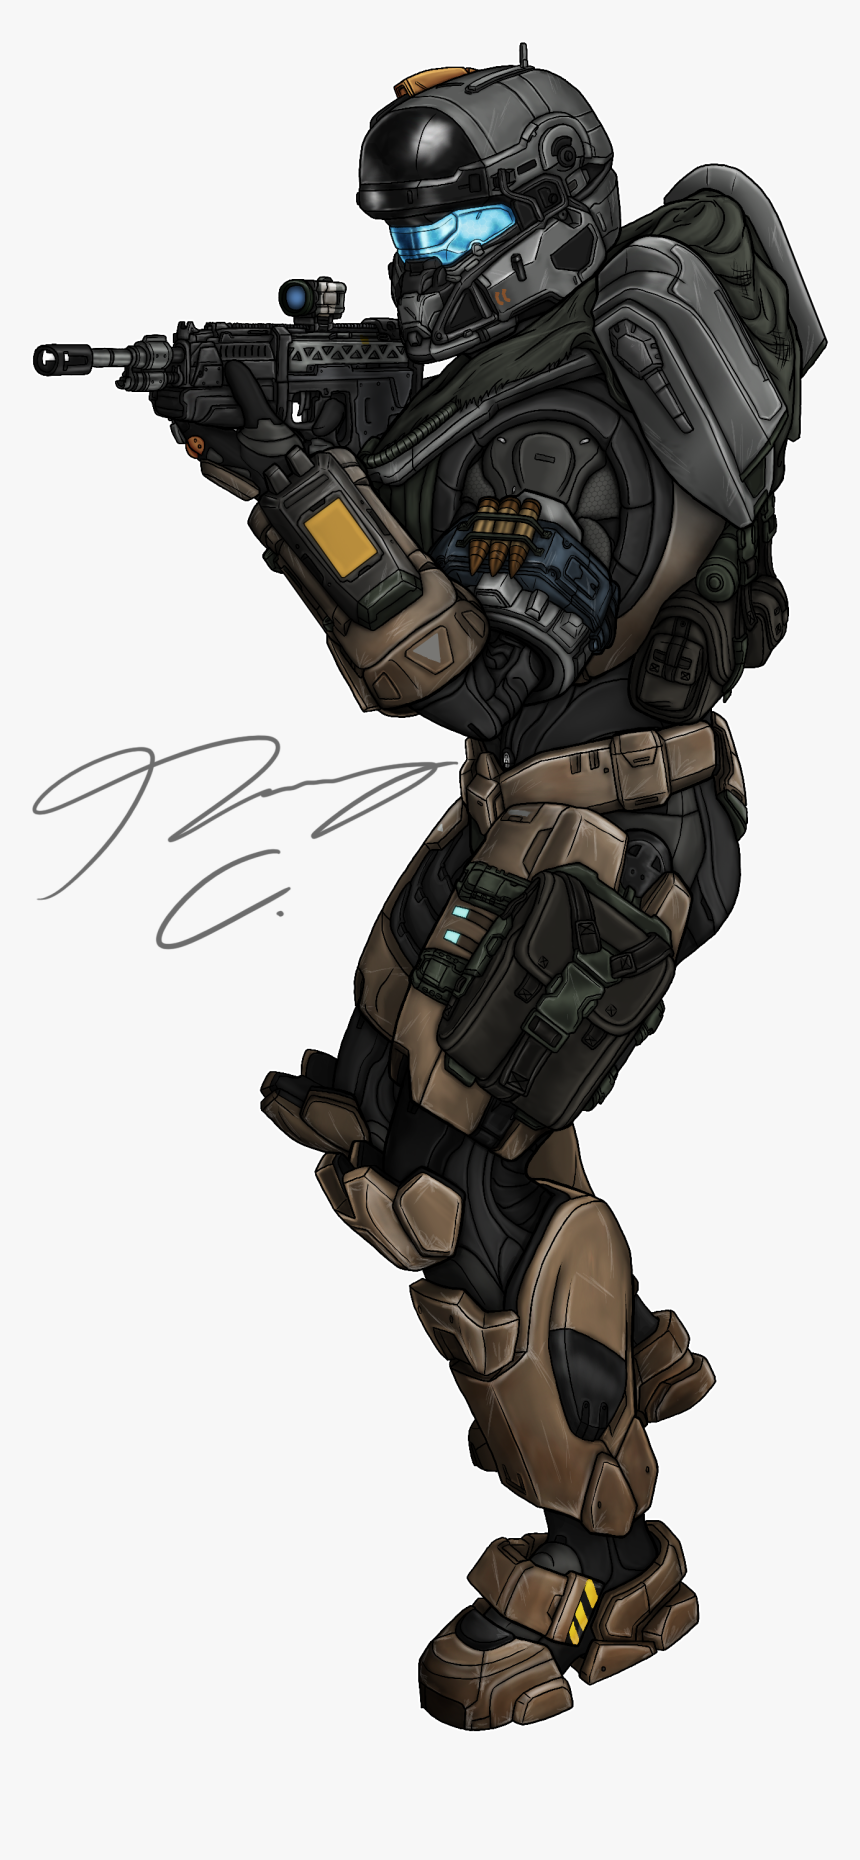 Spartan Colachsso - Halo Reach Spartan Concept Art, HD Png Download, Free Download